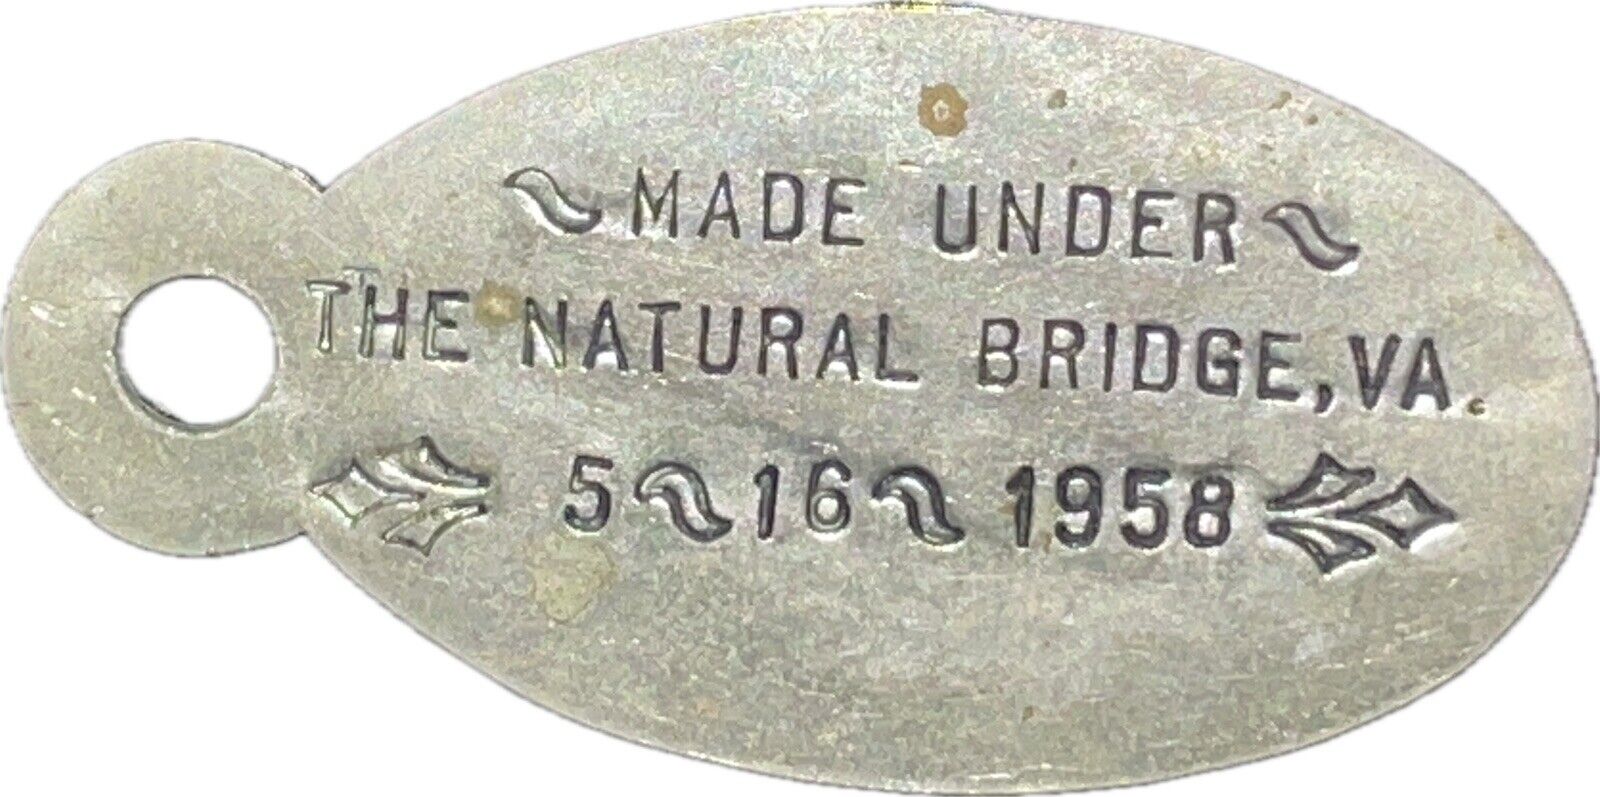 Vintage Lost Key Tag “Made under Natural Bridge Va” Dated 5-16-1958 Bday Gift??